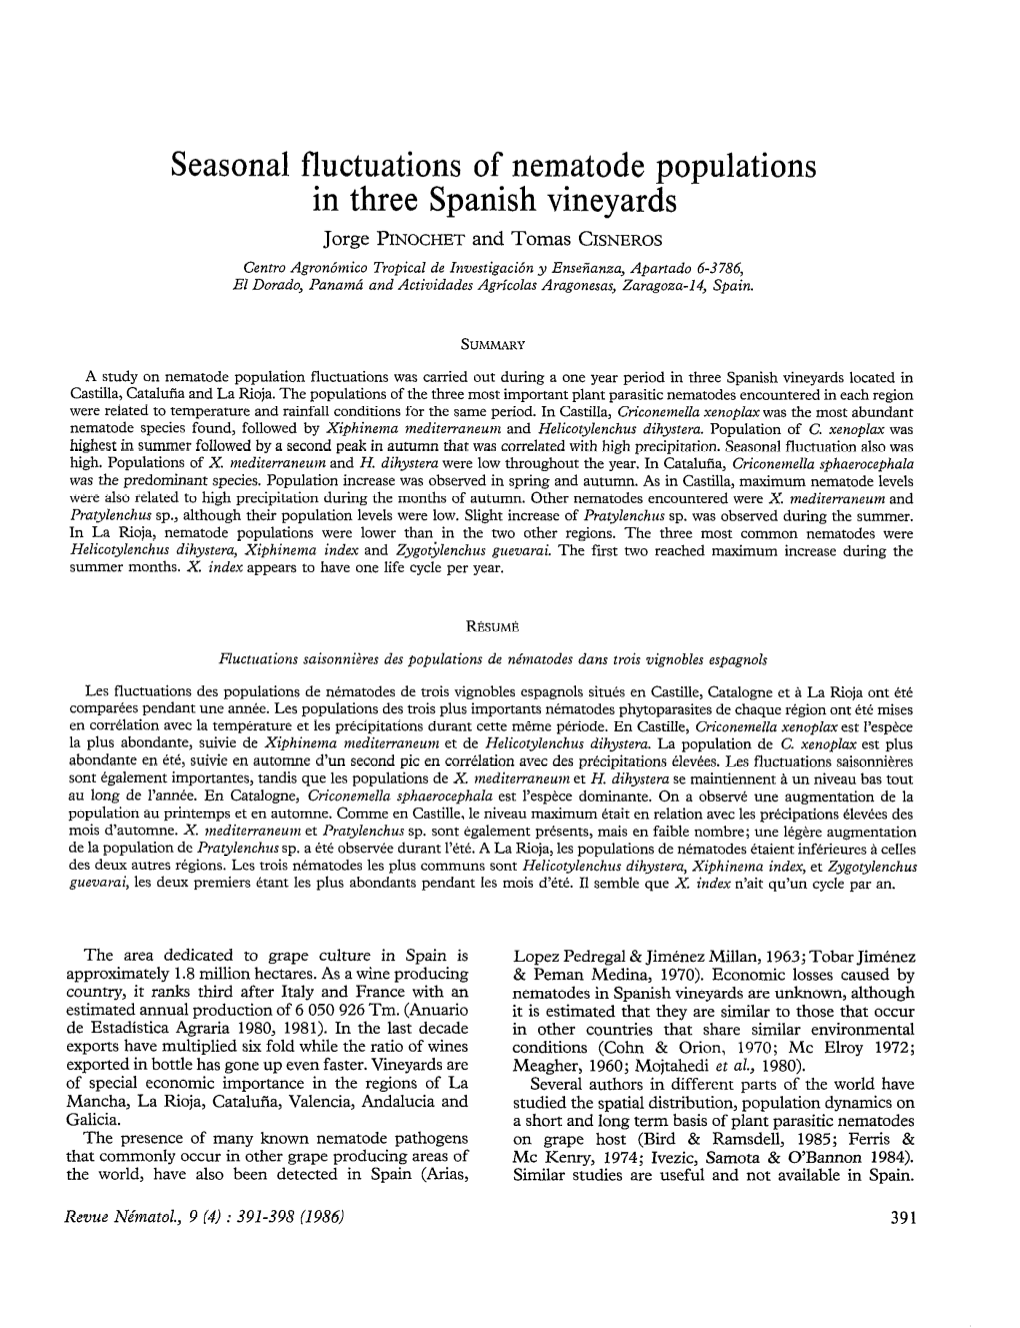 Seasonal Fluctuations of Nematode Populations in Three Spanish